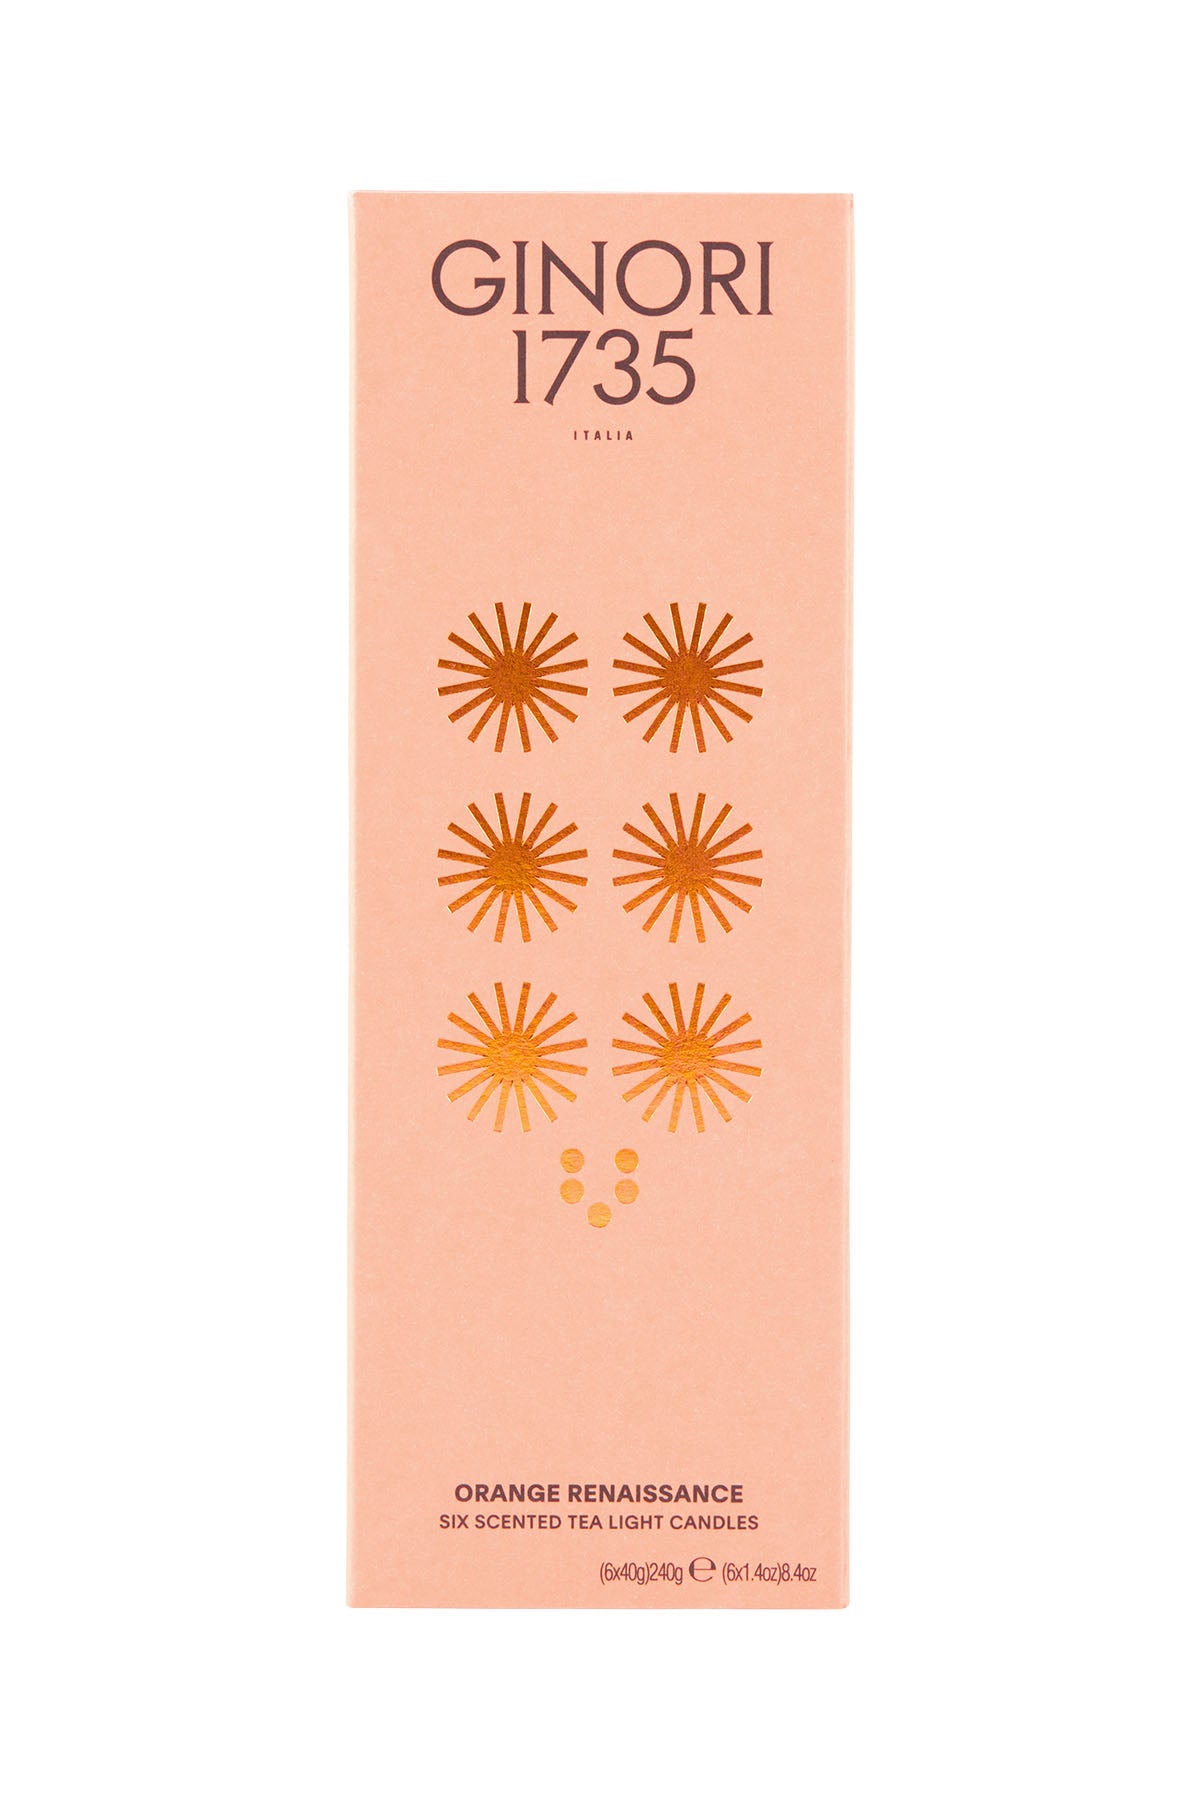 Ginori 1735 orange renaissance scented tea light candles refill-0